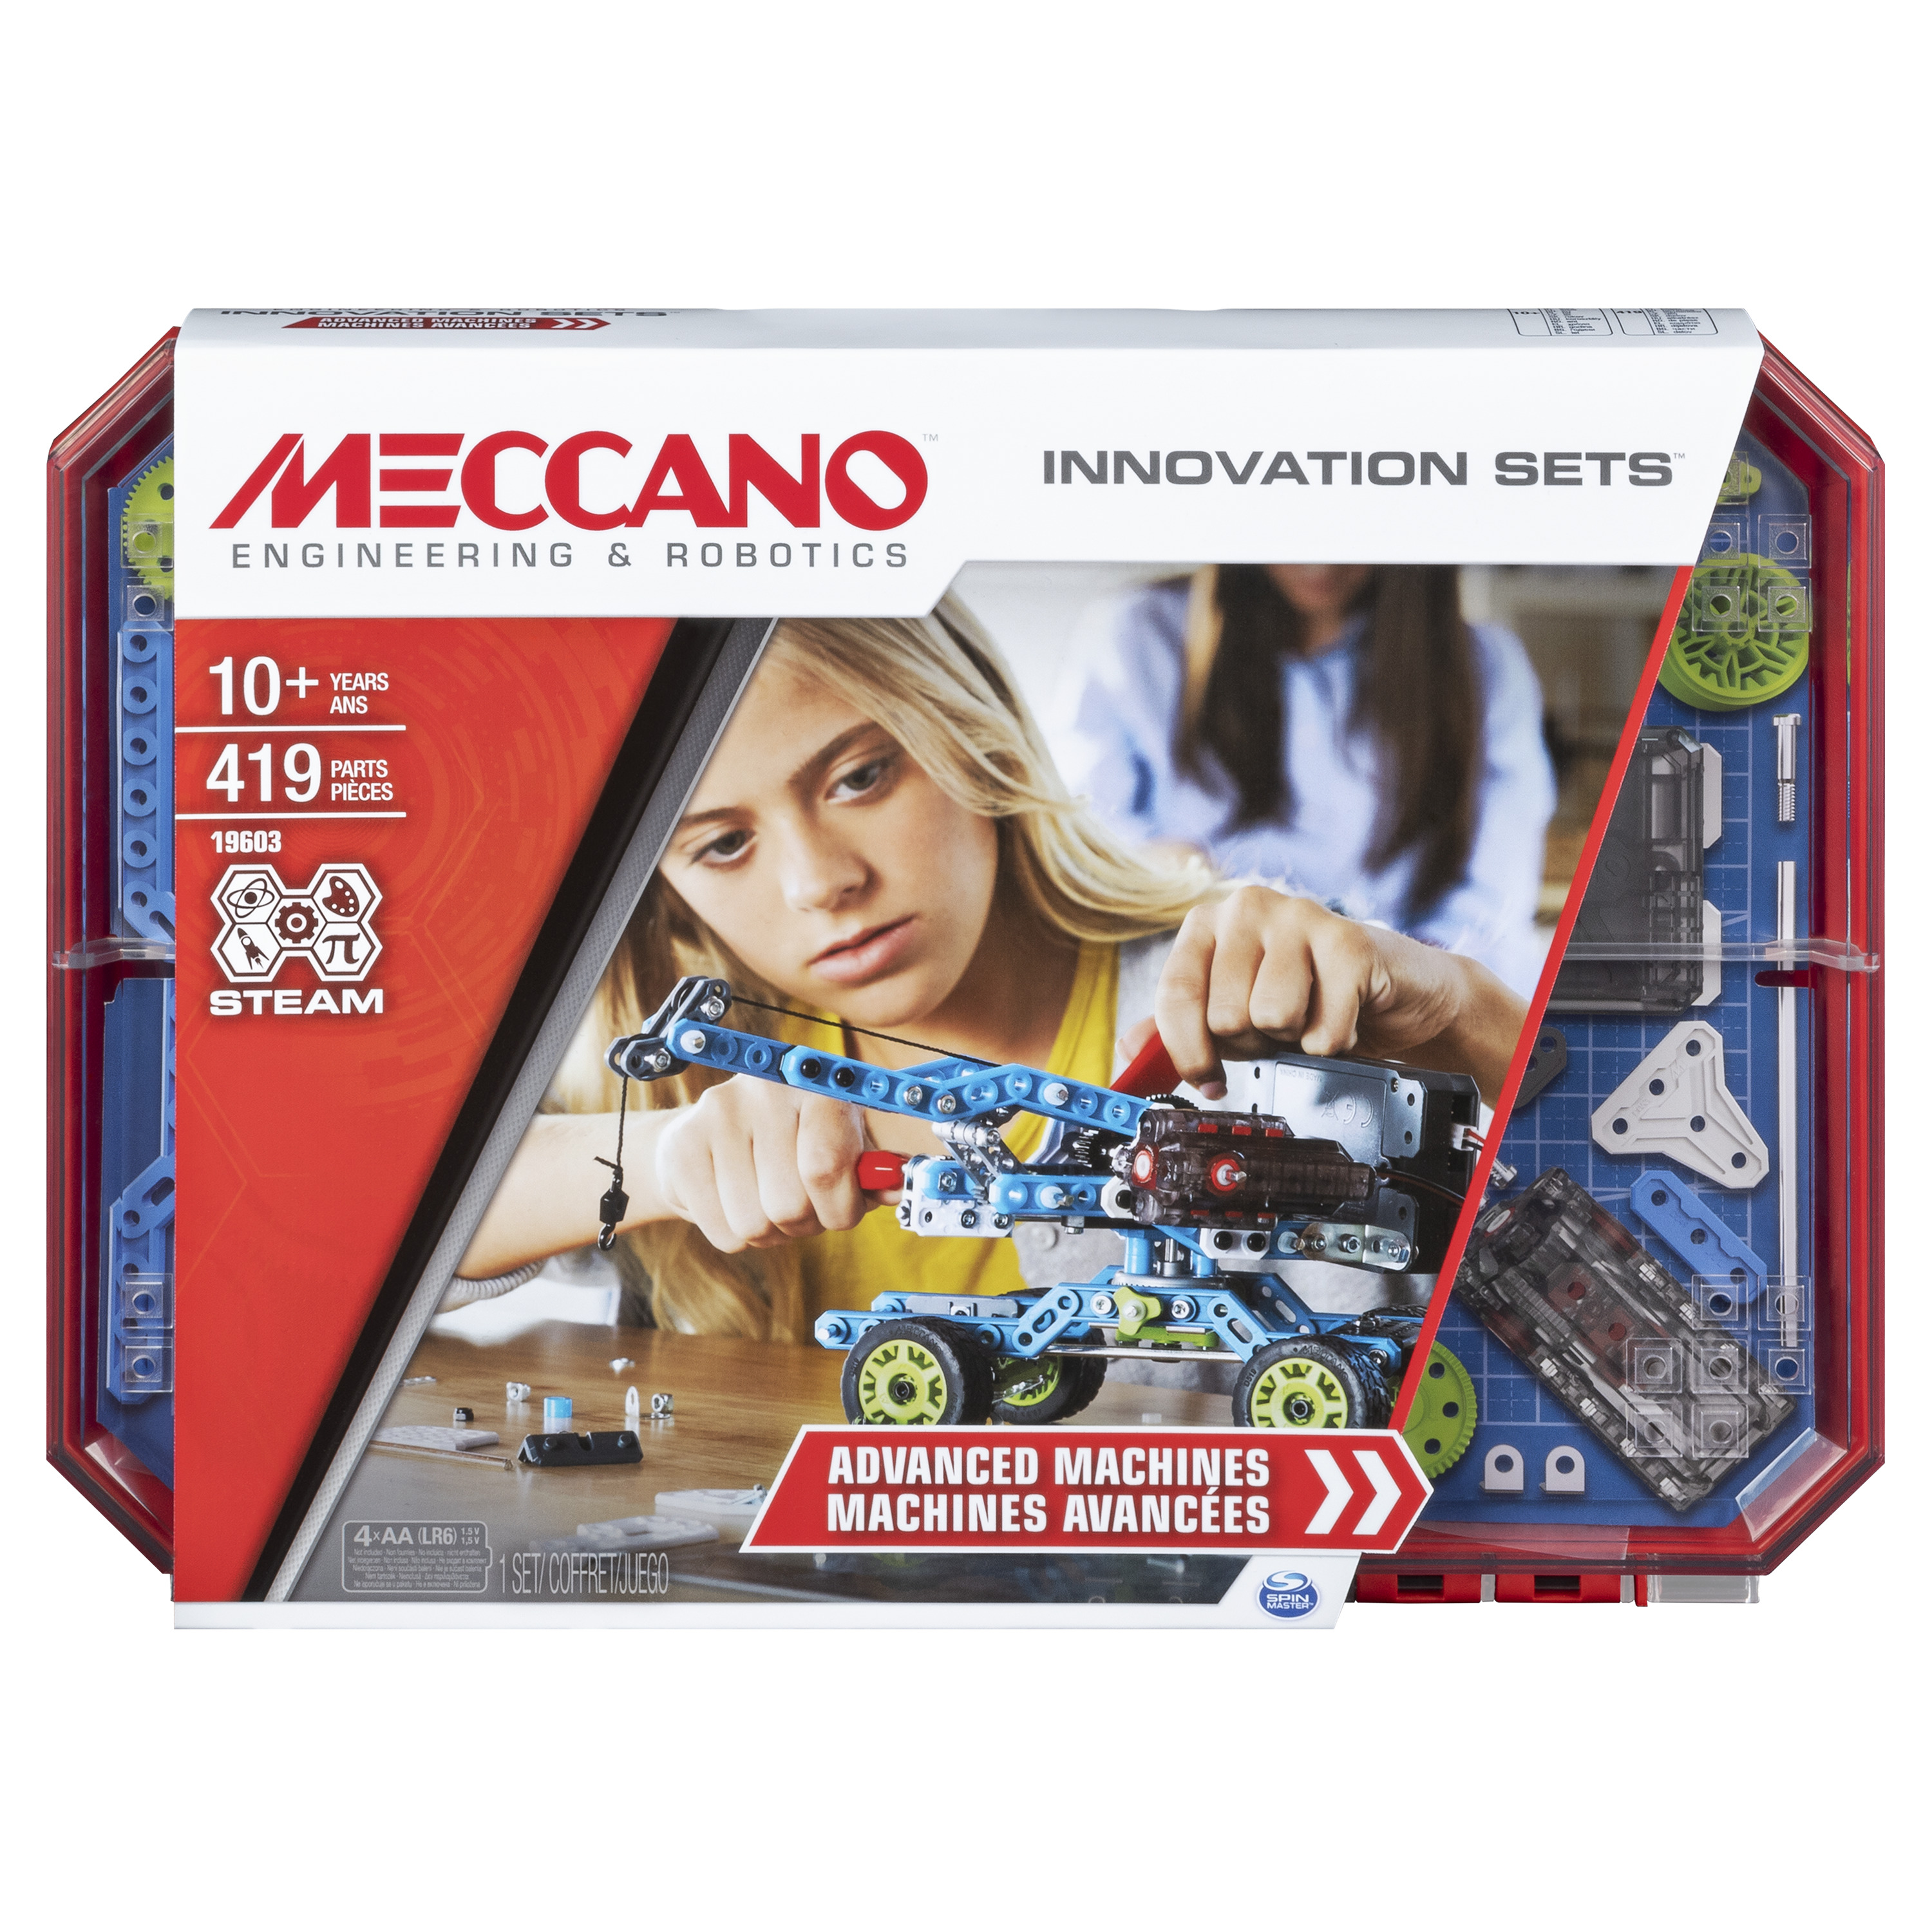 meccano engineering & robotics